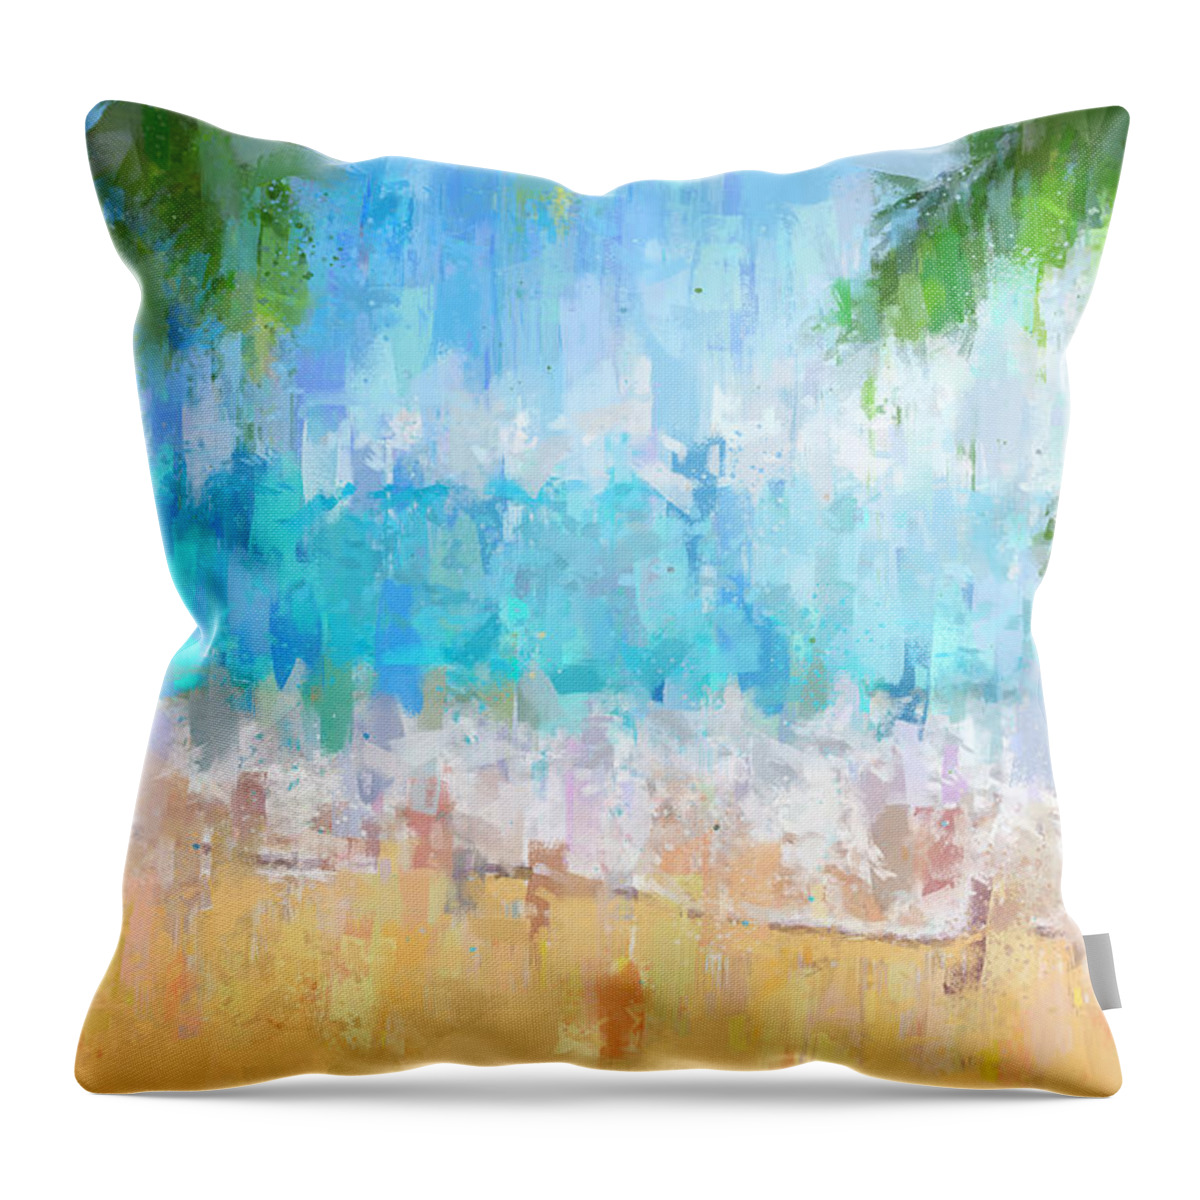 Blue Skye Throw Pillow featuring the painting The blue skye - Aloha Hawaii by Vart Studio